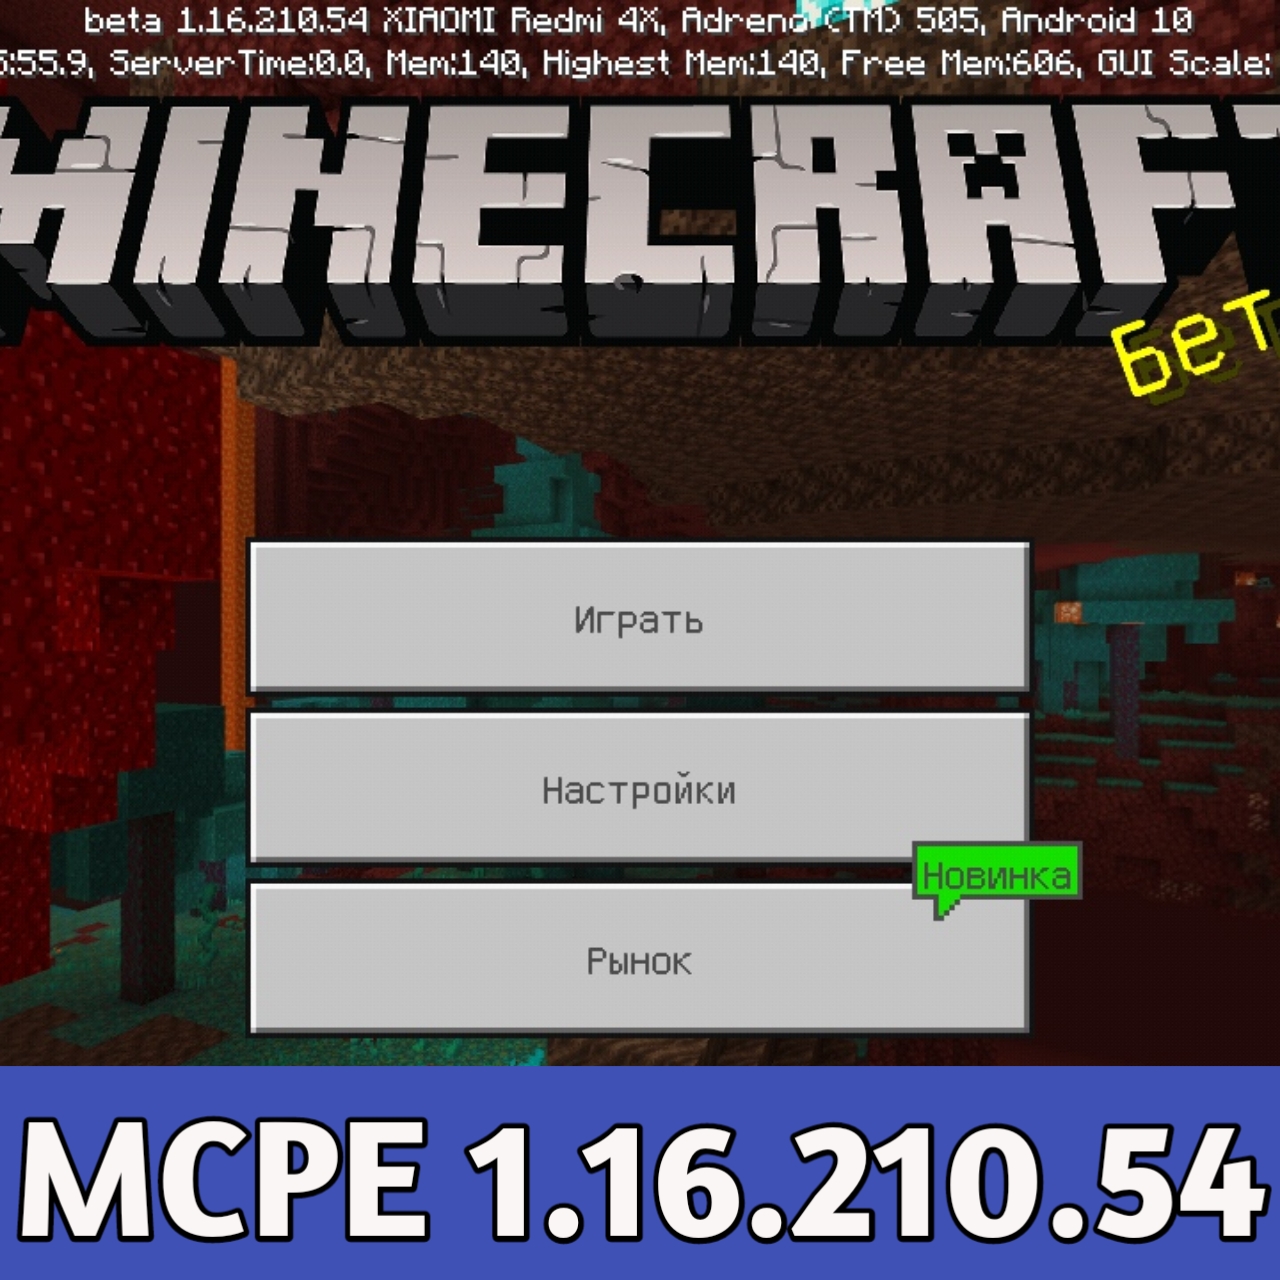 Download Minecraft PE 1.16.210.54 apk free Nether Update